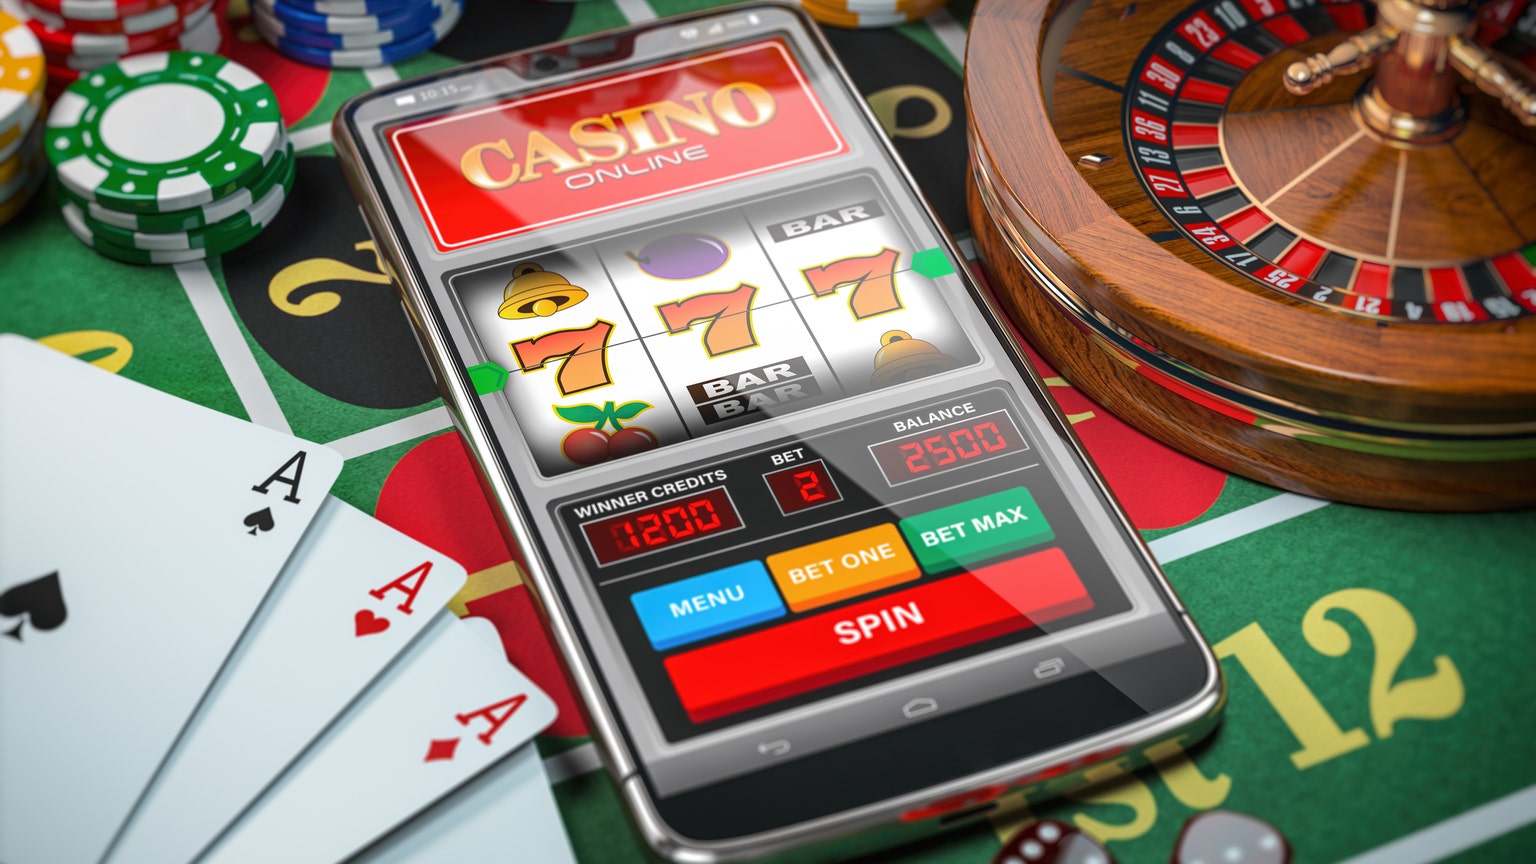 GameTwist Casino app review Archives - AlphaDigits